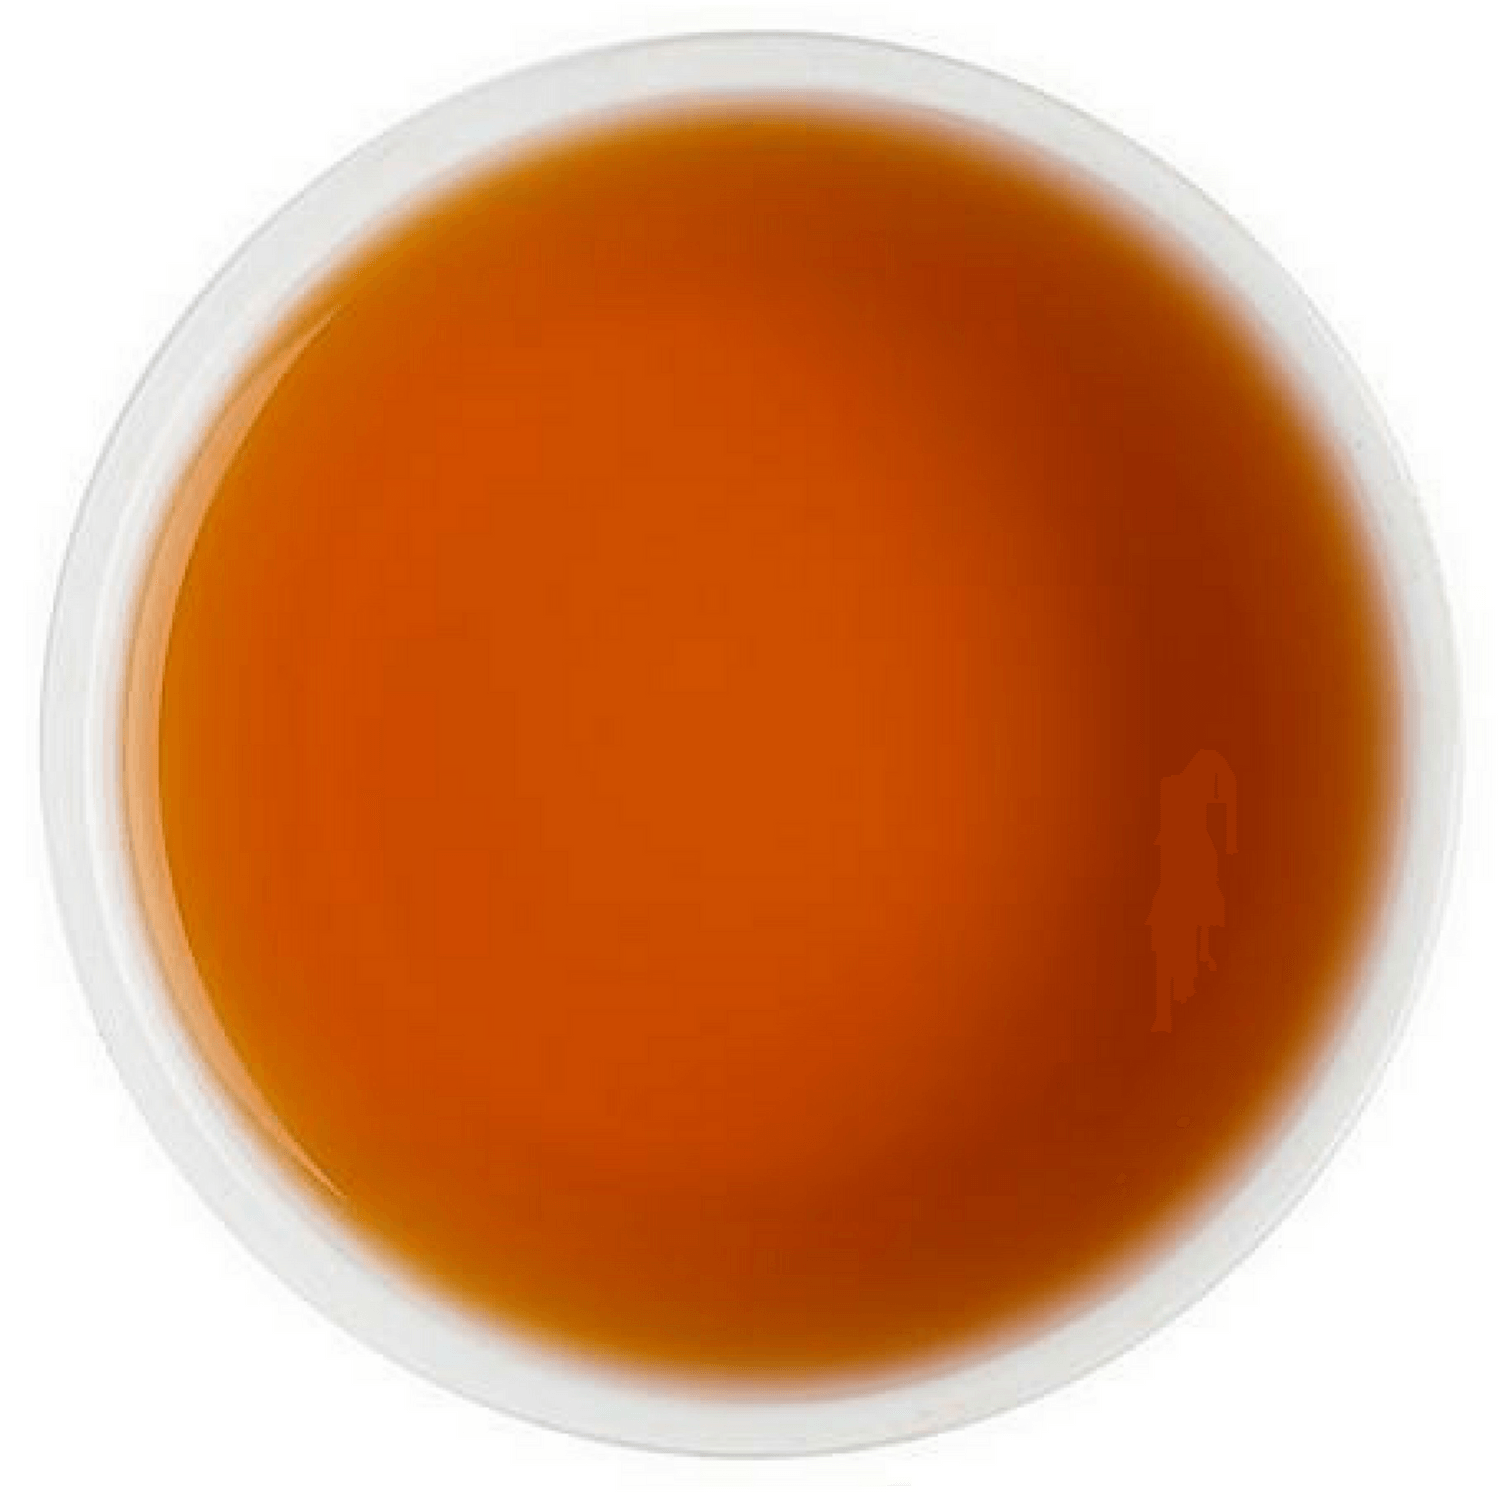 Extravagazant Green Tea - Tearaja